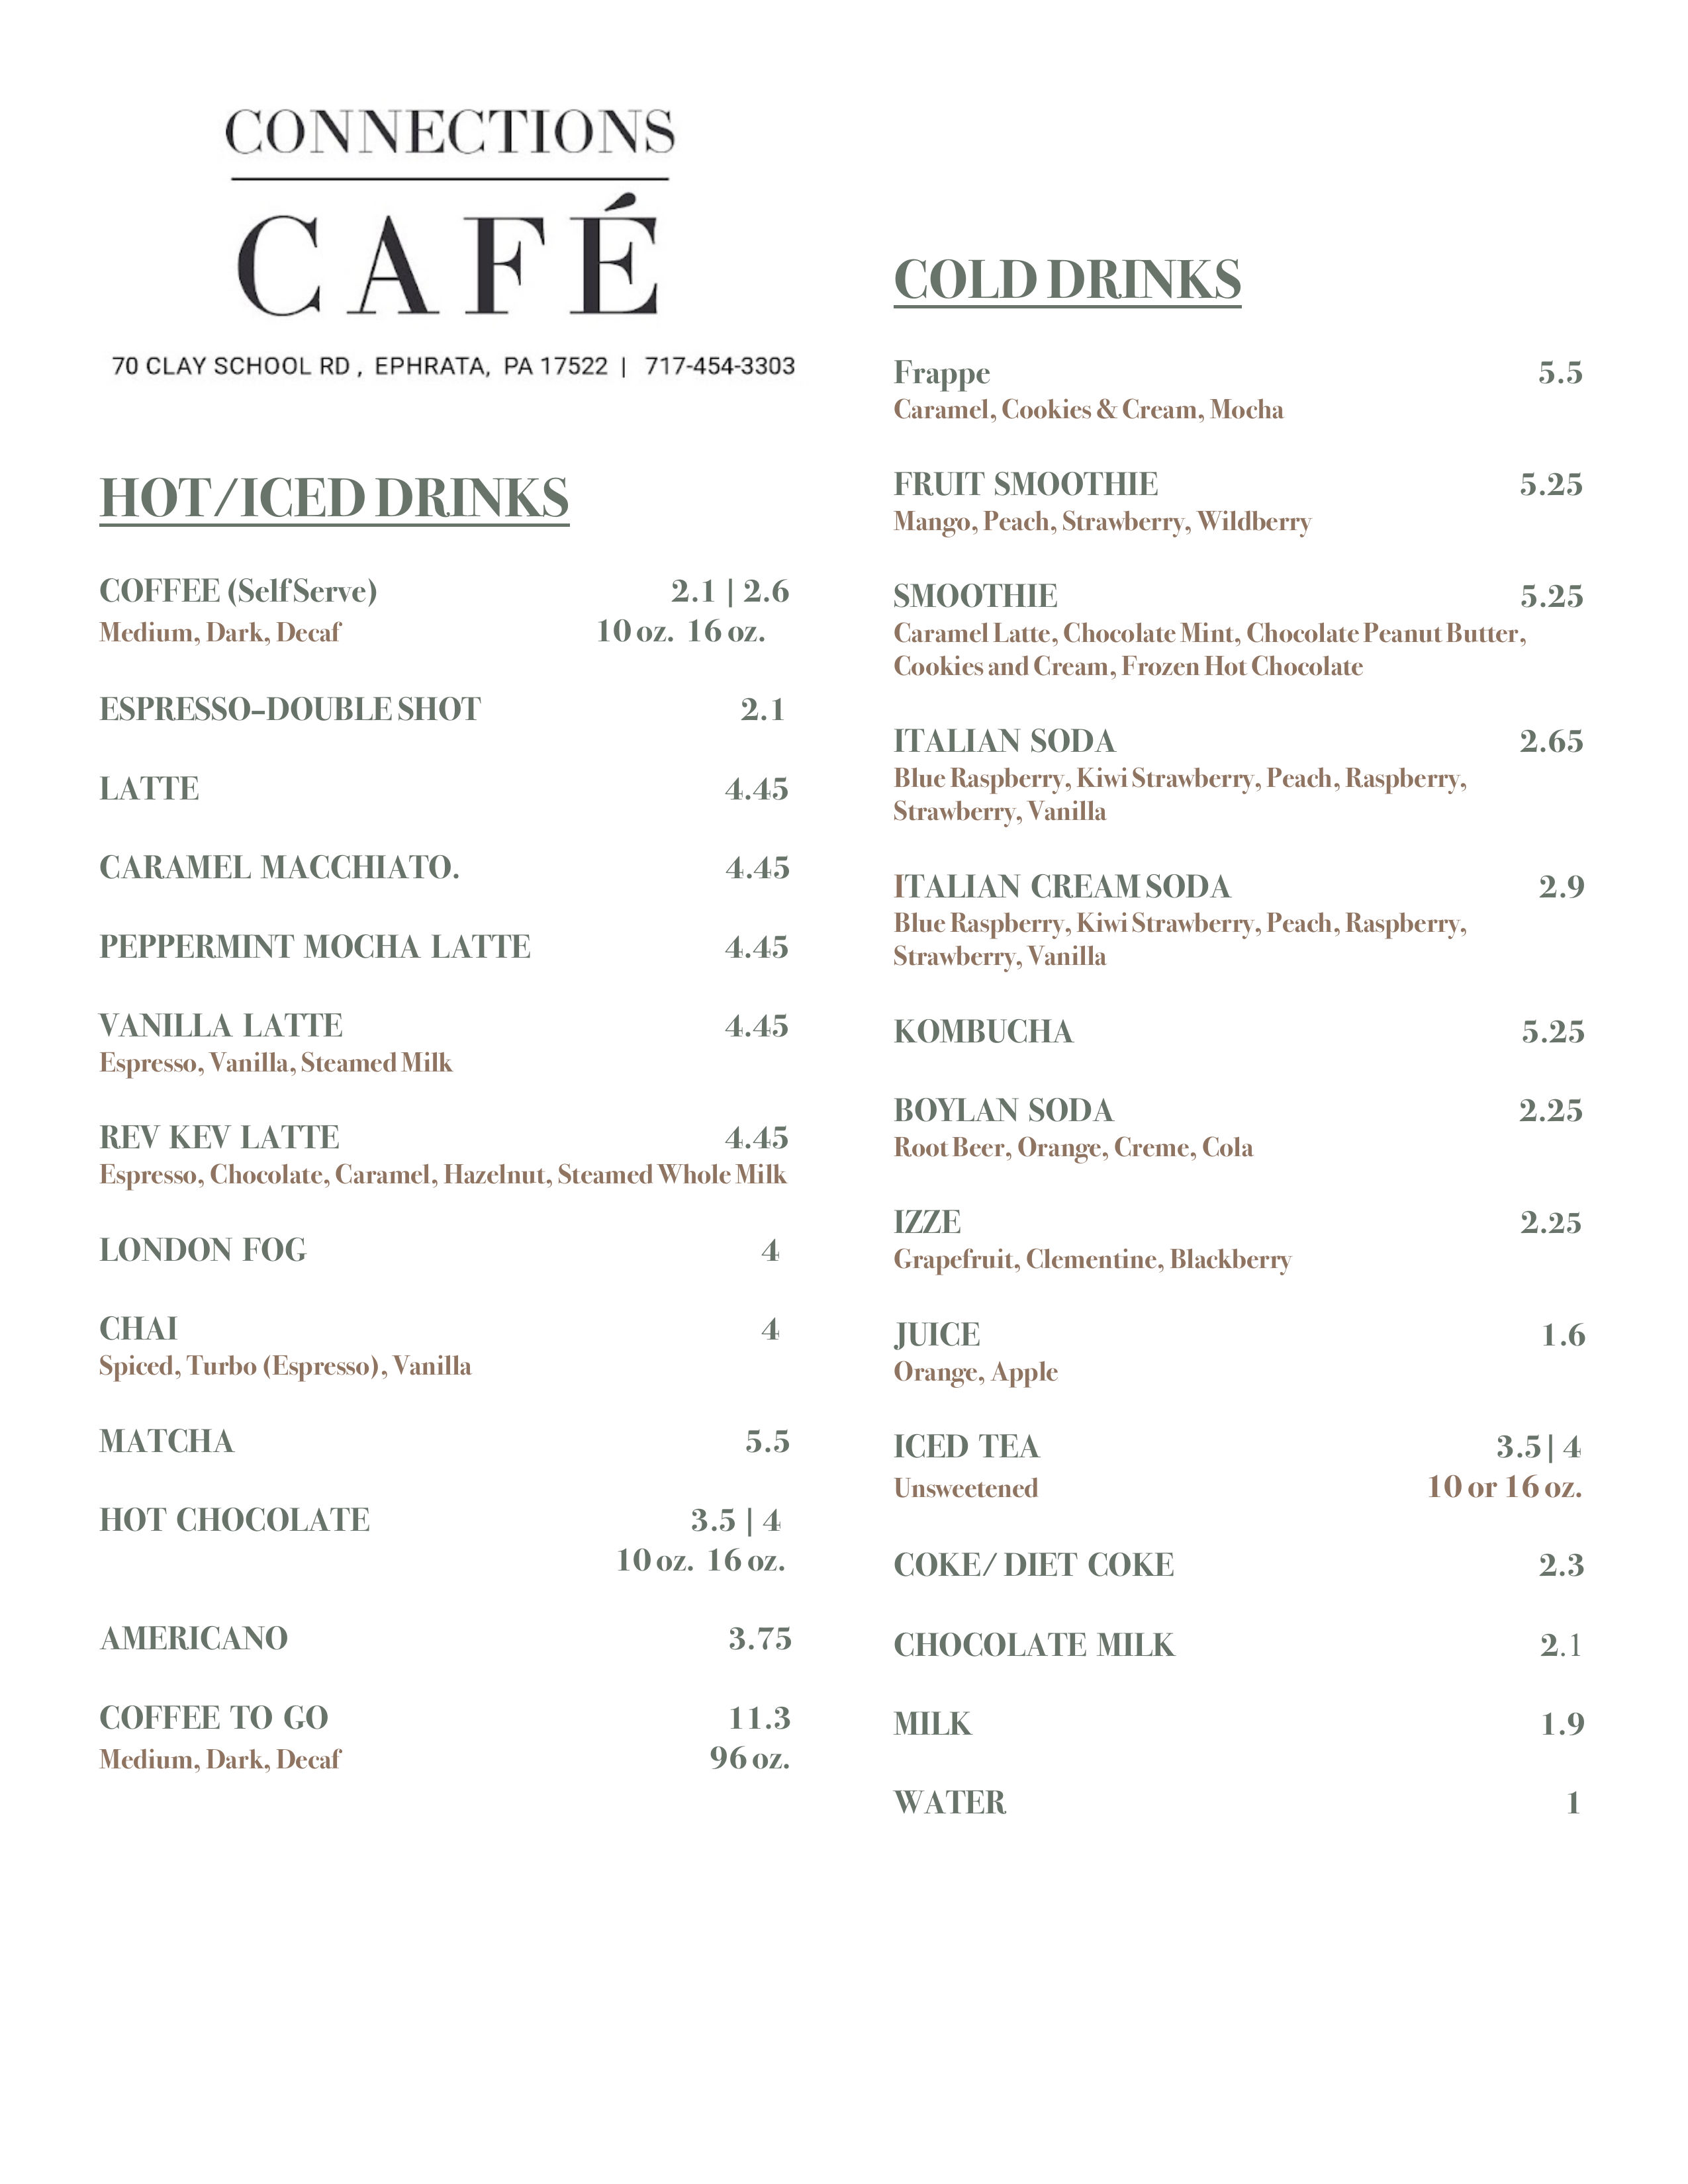 Cafe menu page 2